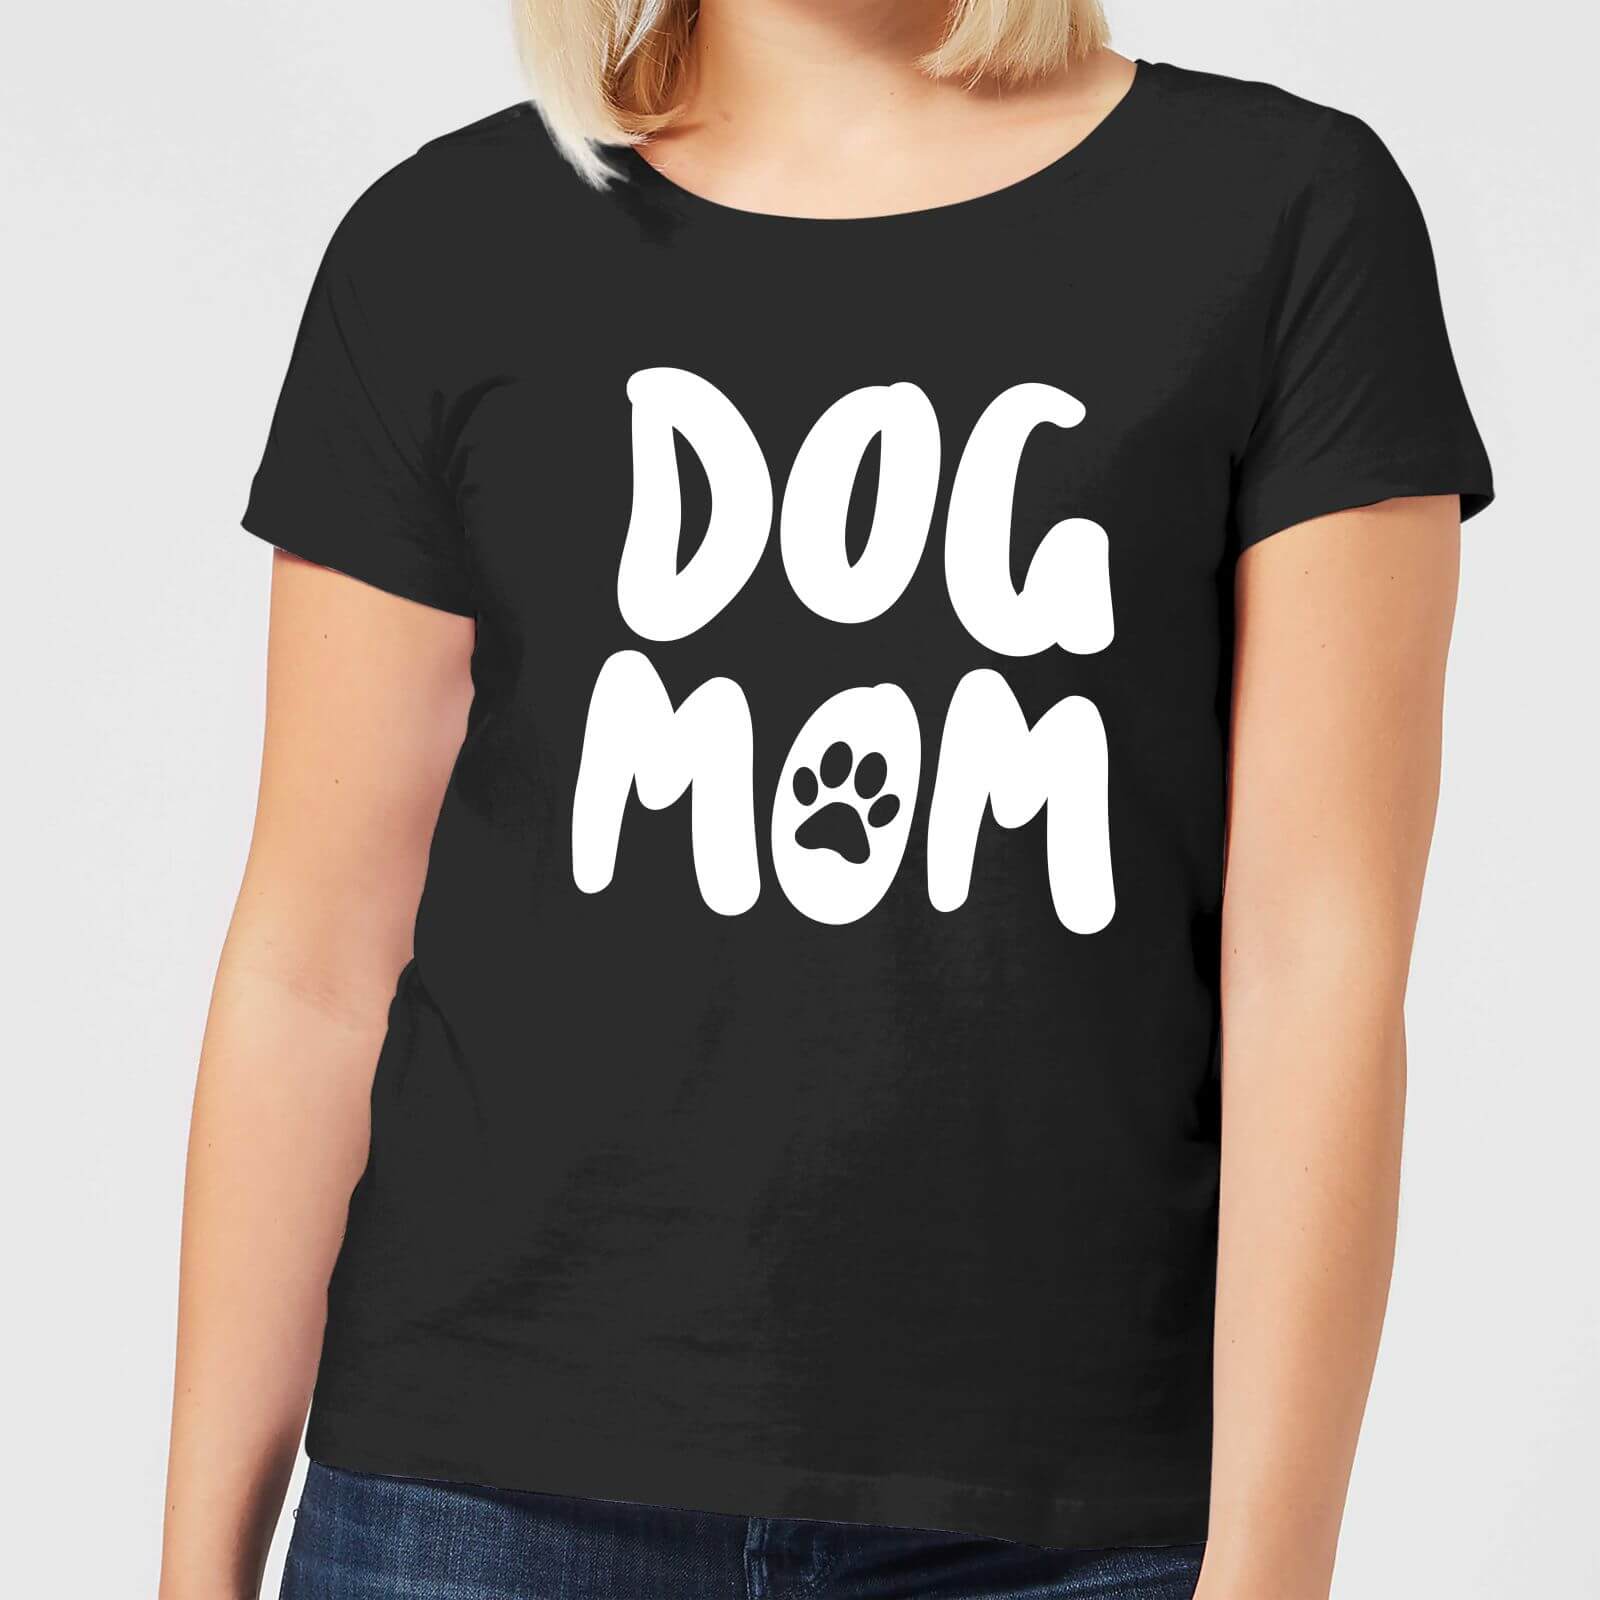 Dog Mom Women's T-Shirt - Black - 3XL - Black